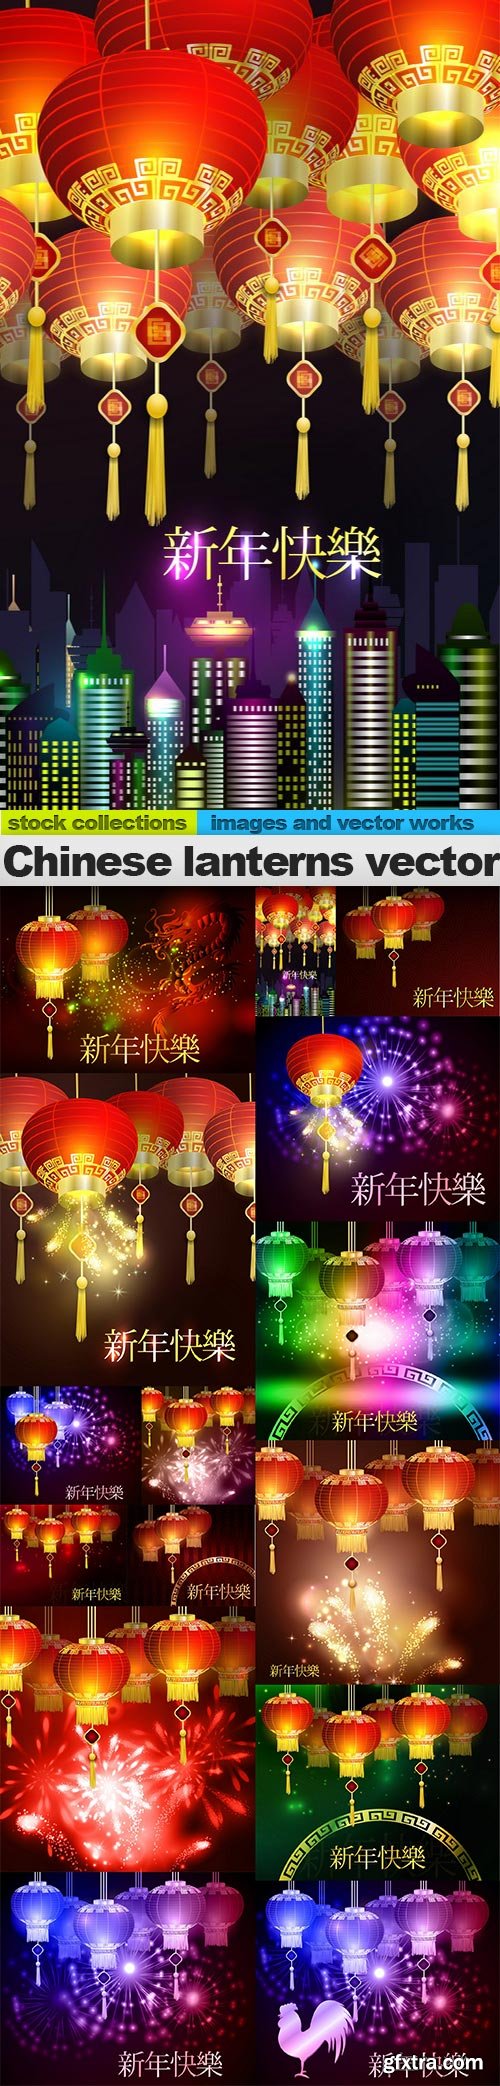 Chinese lanterns vector, 15 x EPS